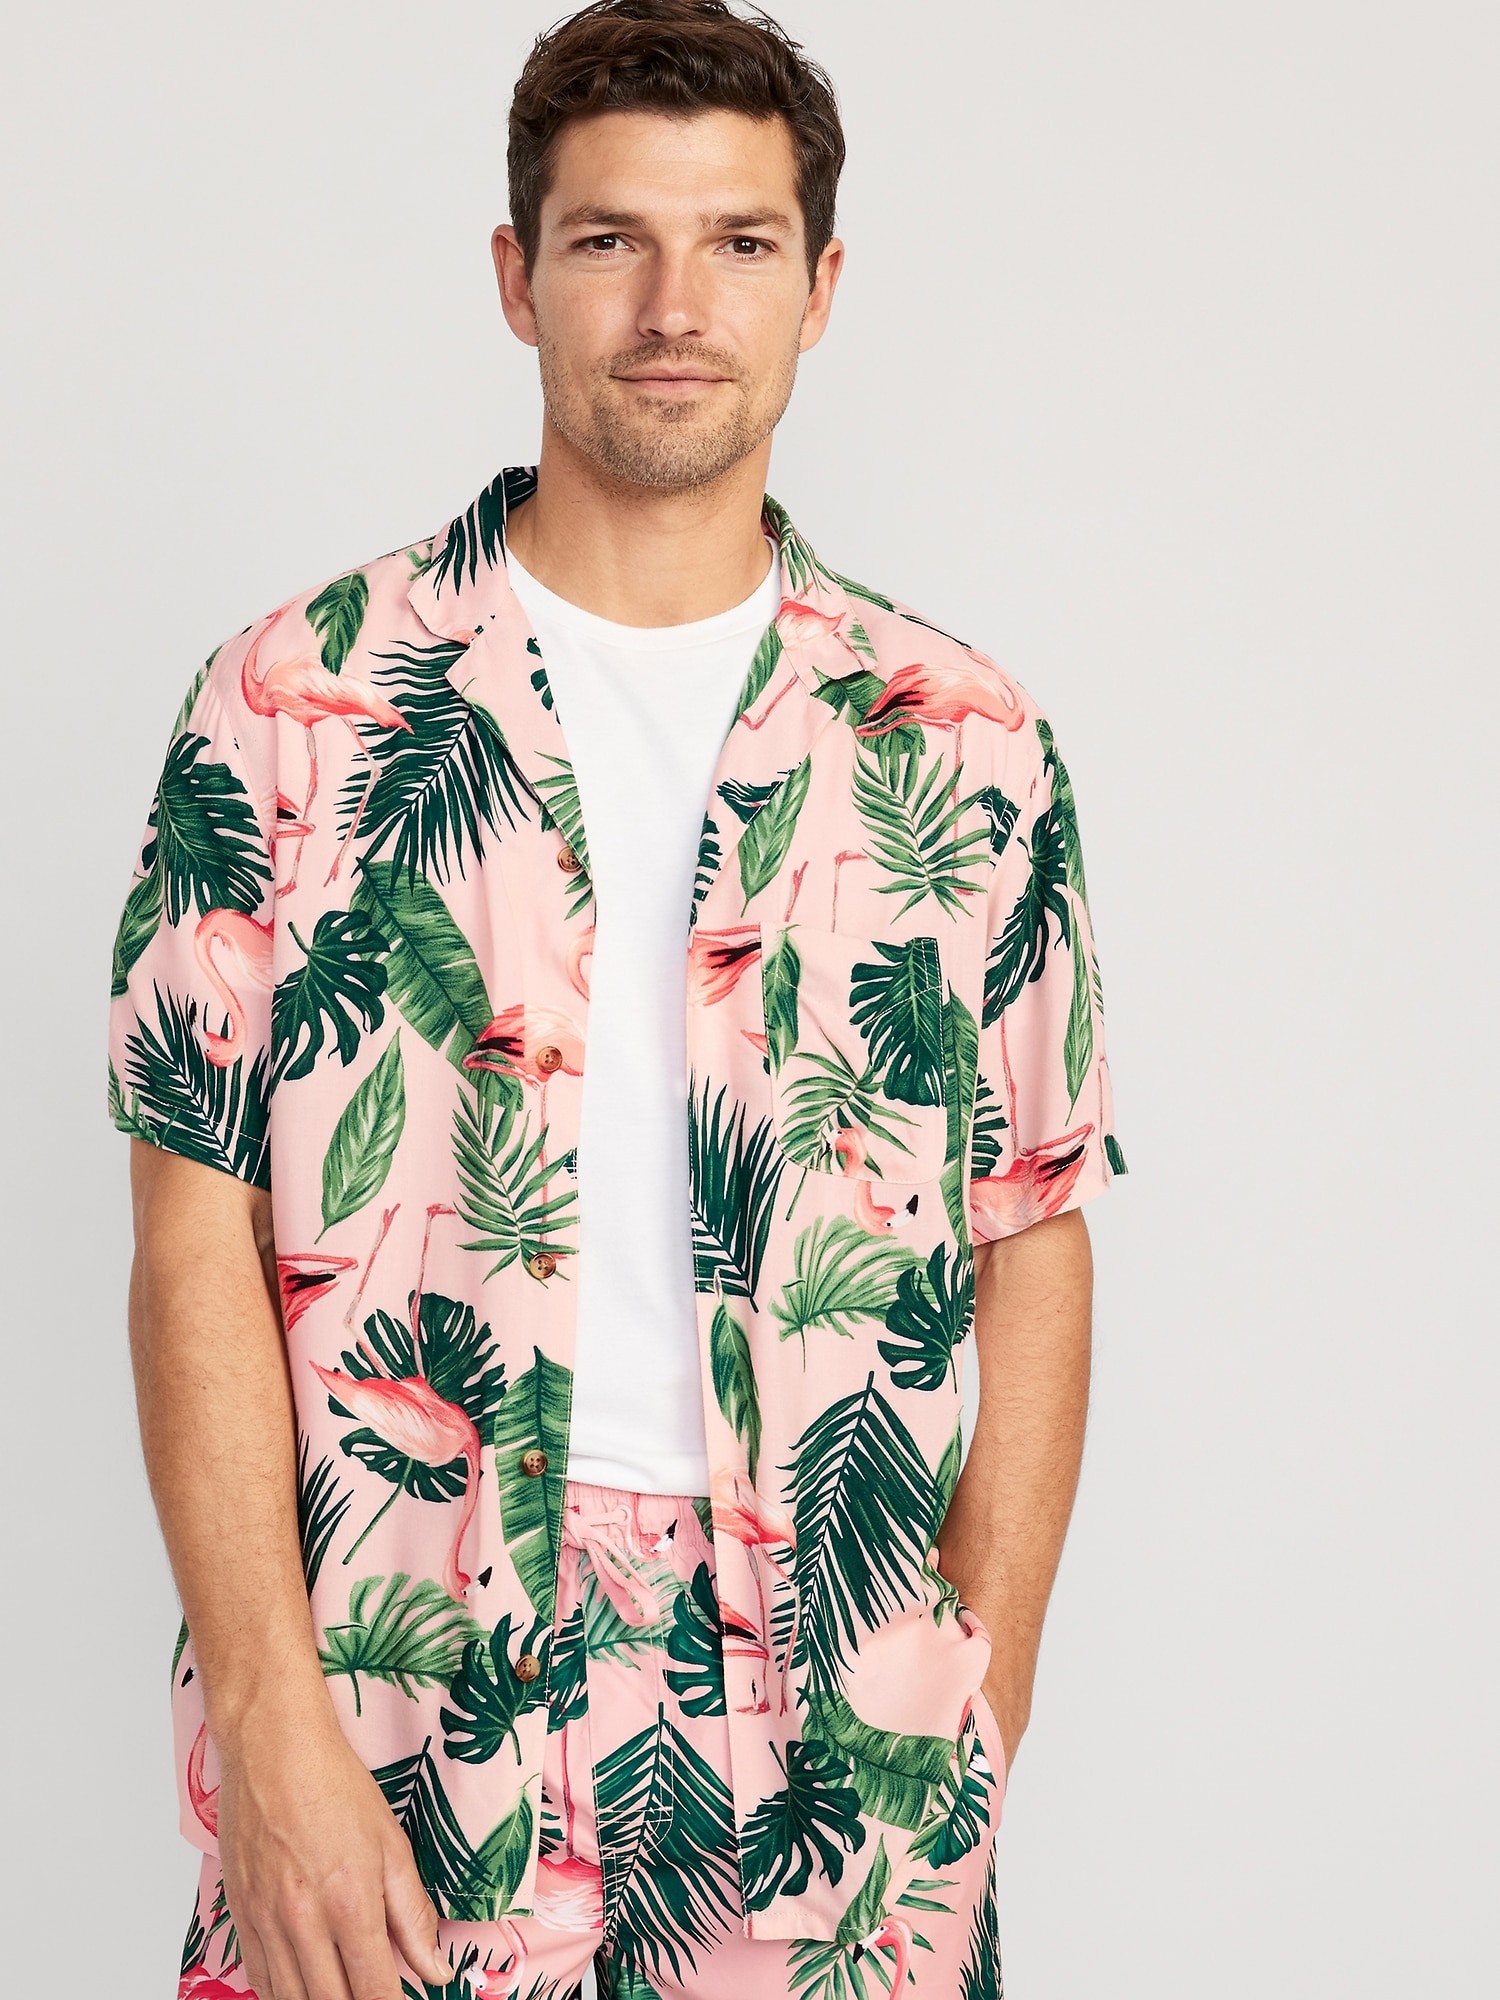 Men's Floral Print Shirts